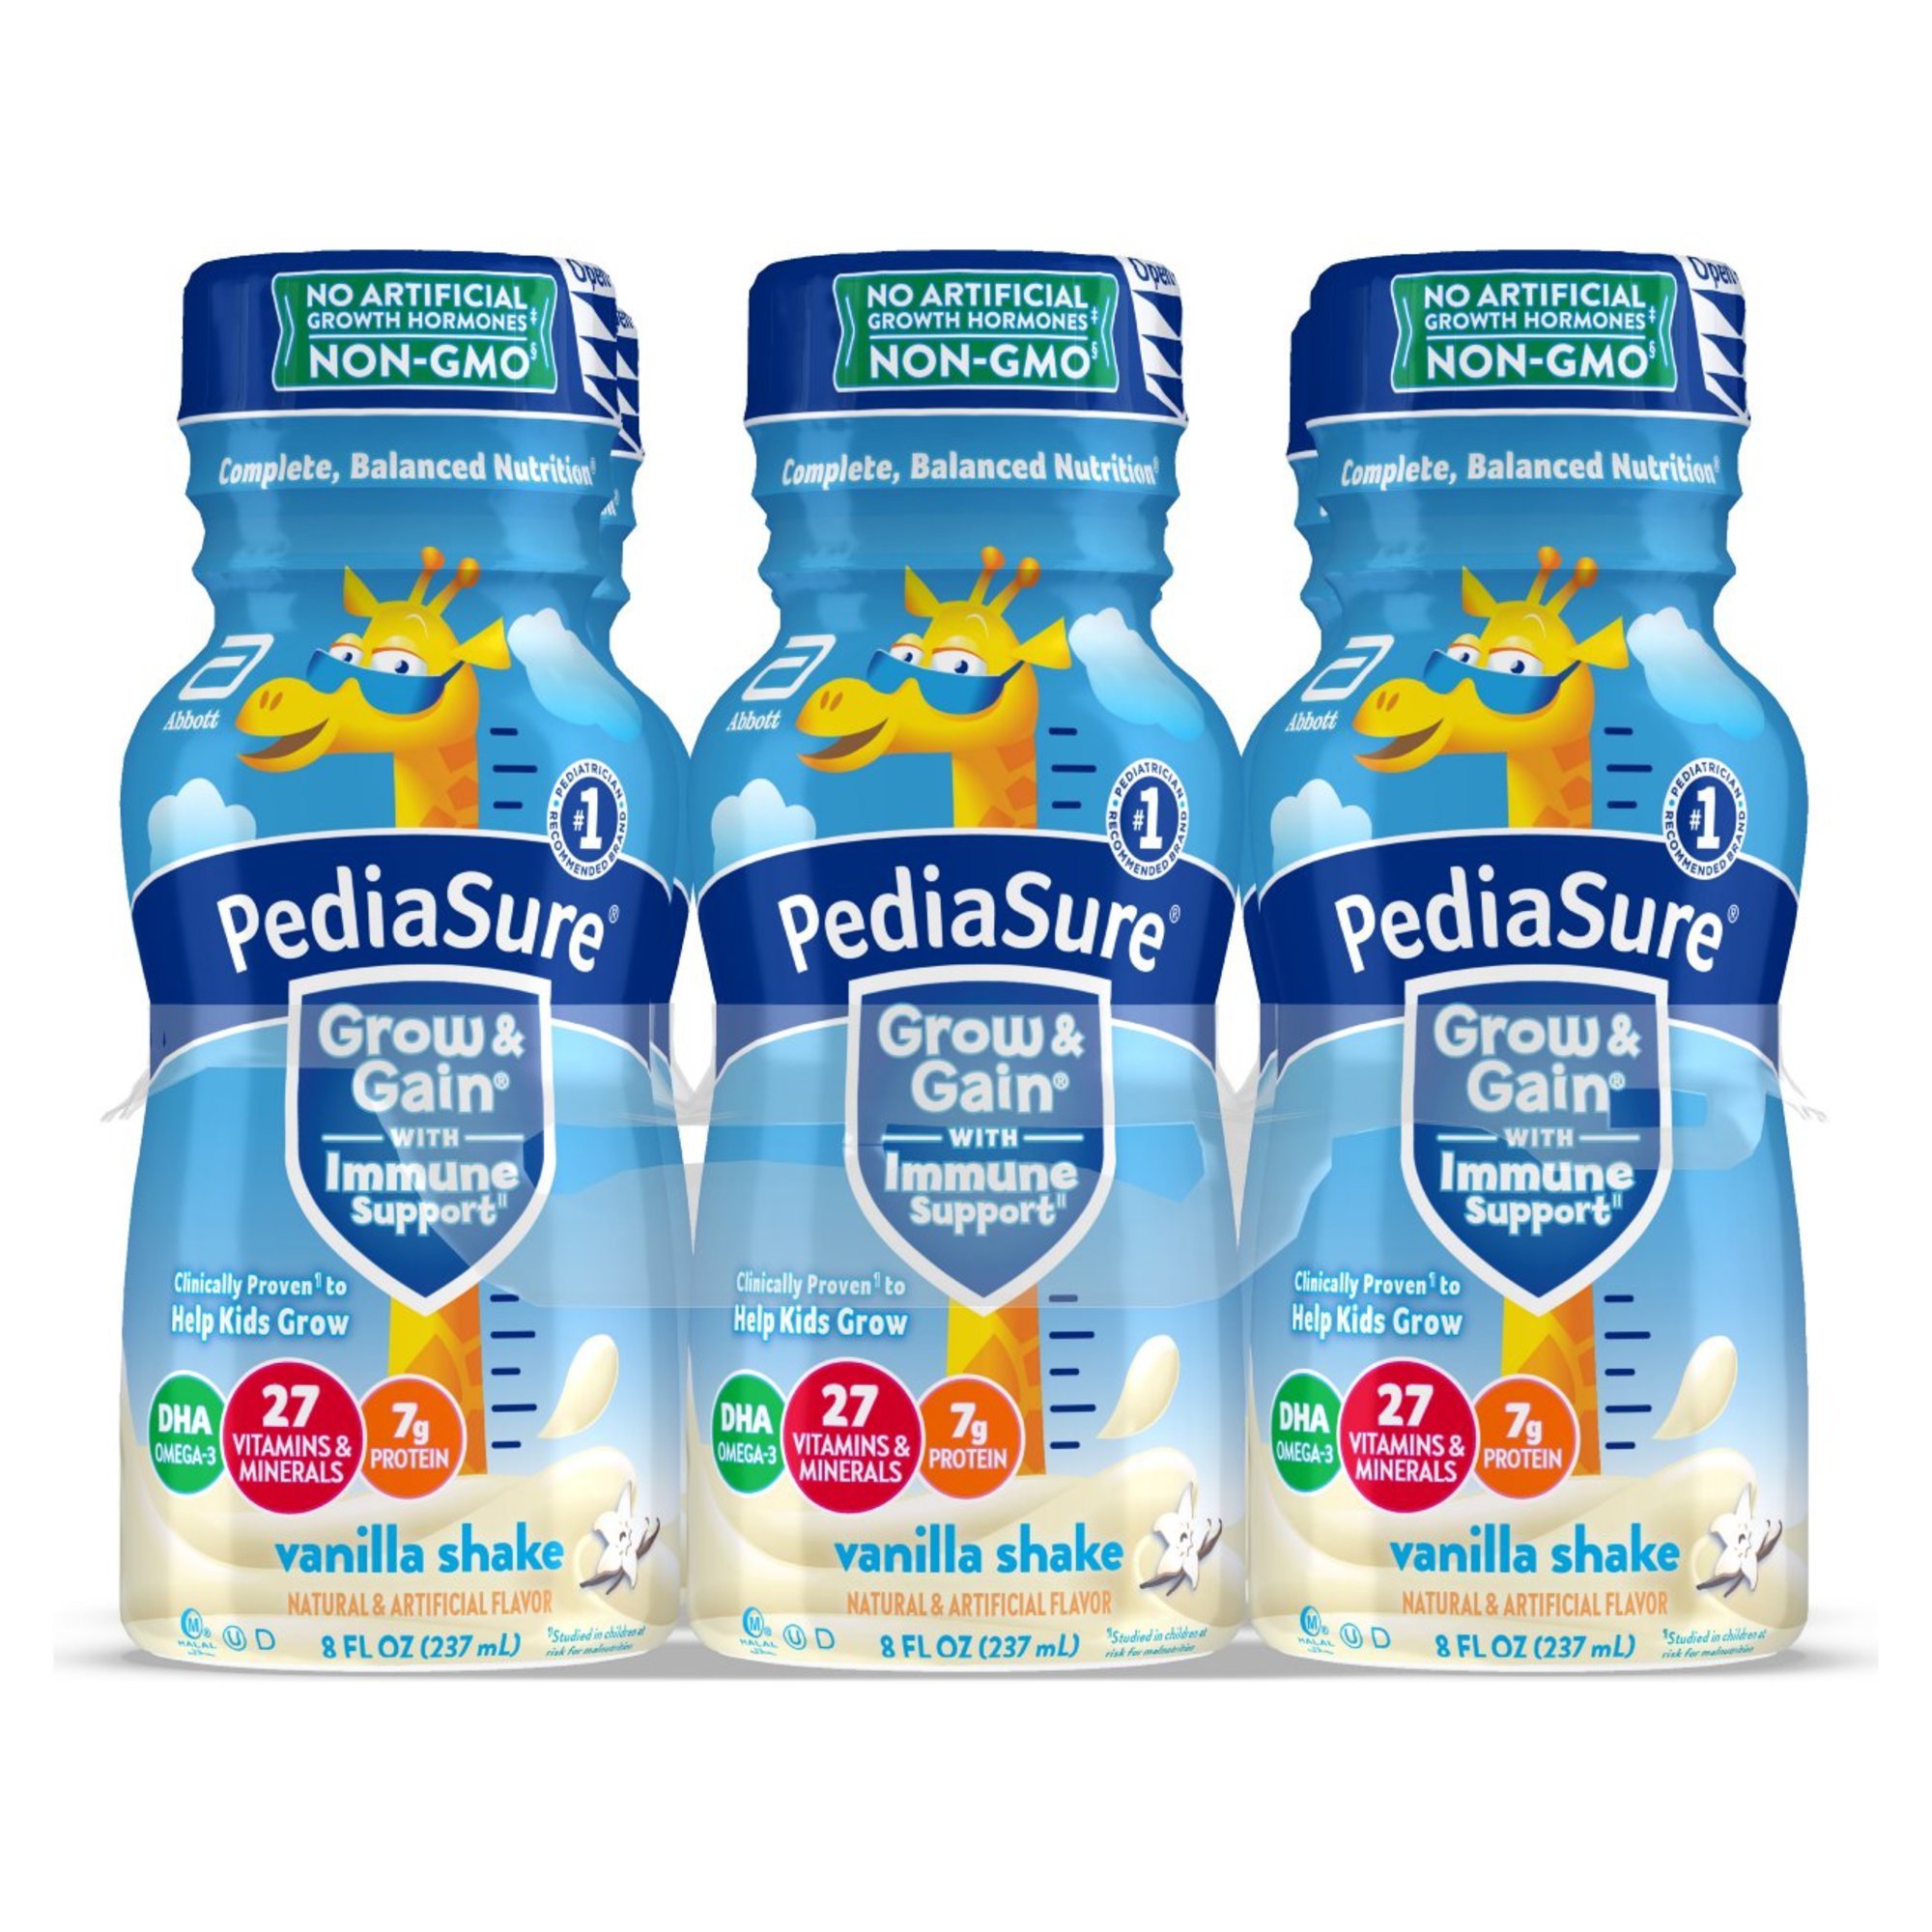 PediaSure Grow & Gain with Immune Support, Kids Protein Shake, 7g Protein, Vanilla 8-fl-oz Bottle - Shop Food & Formula at H-E-B